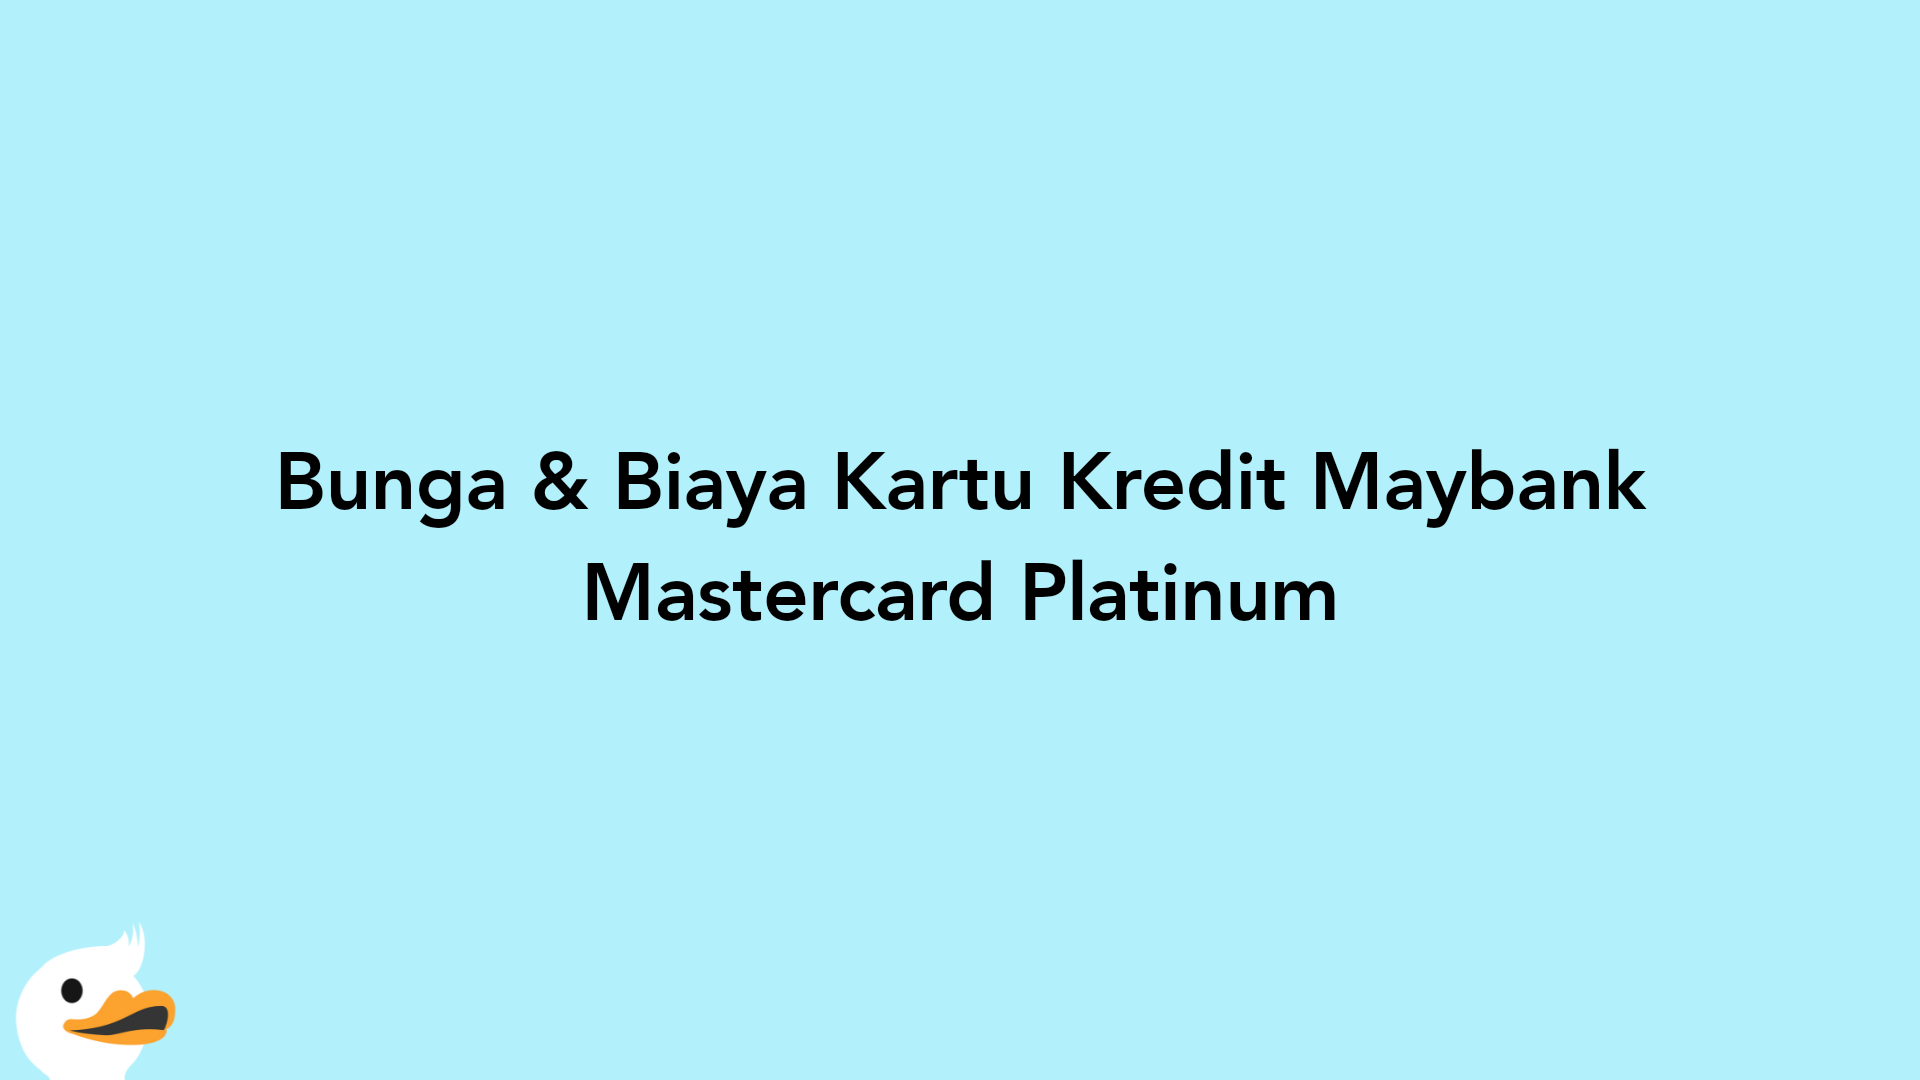 Bunga & Biaya Kartu Kredit Maybank Mastercard Platinum